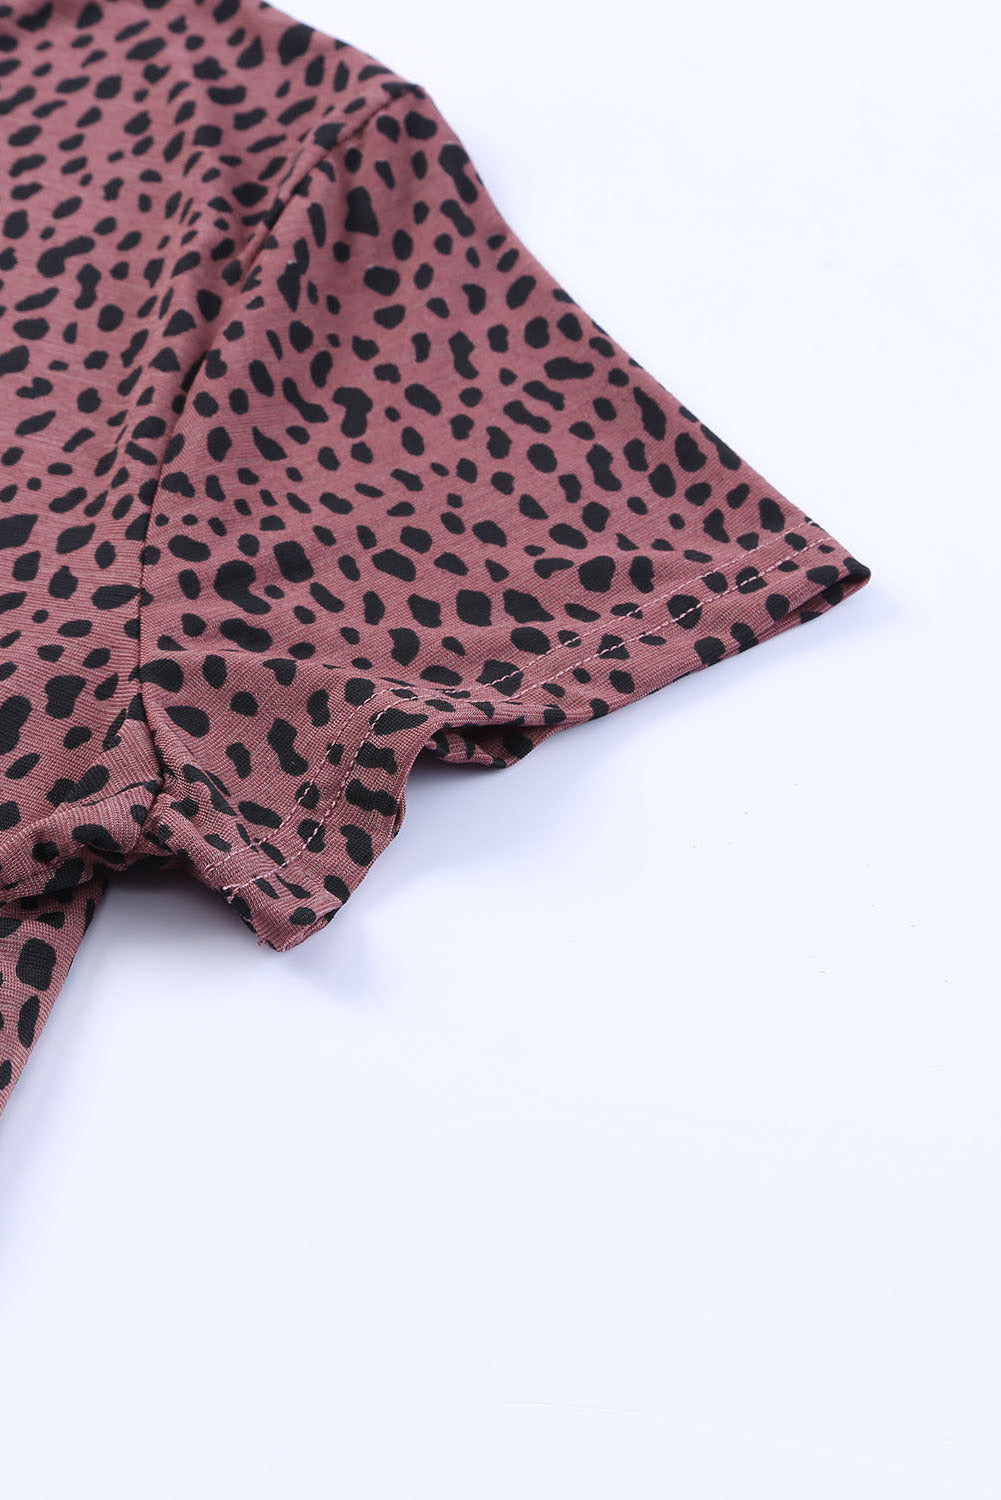 Fiery Red Cheetah Print O-neck Short Sleeve T Shirt